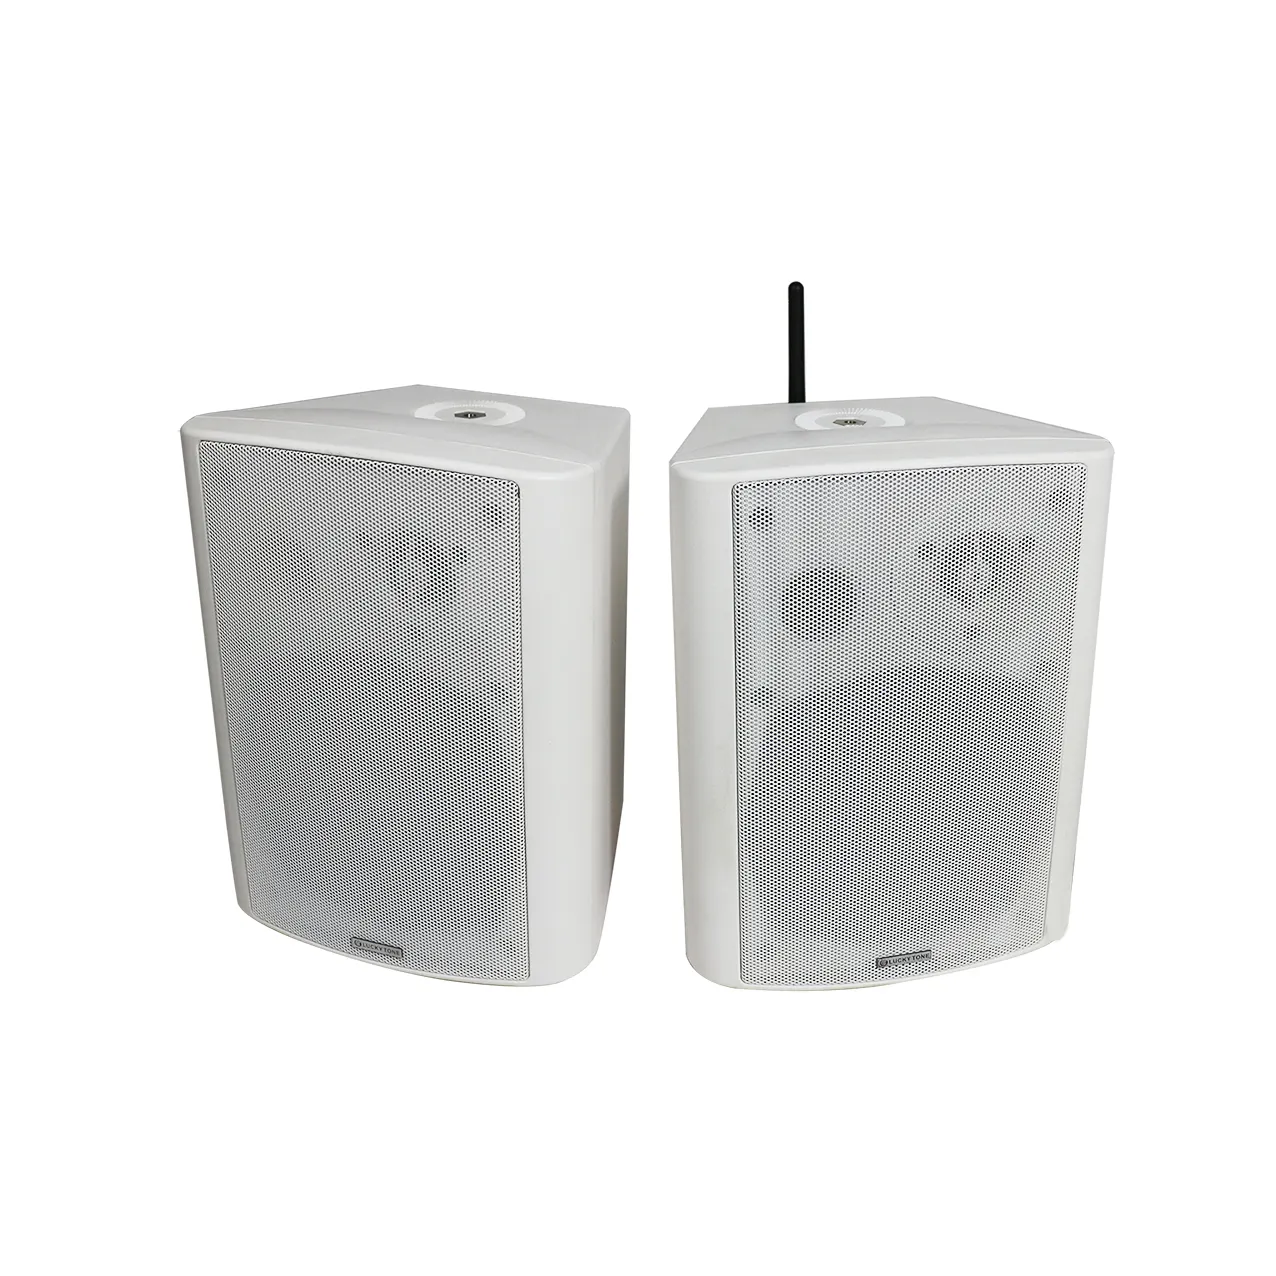 T Custom 2*30W Actieve Bluetooth Luidspreker Pa Openbaar Adres Muur Gemonteerde Ip Passieve Luidspreker Met 2.4G Draadloze Microfoon